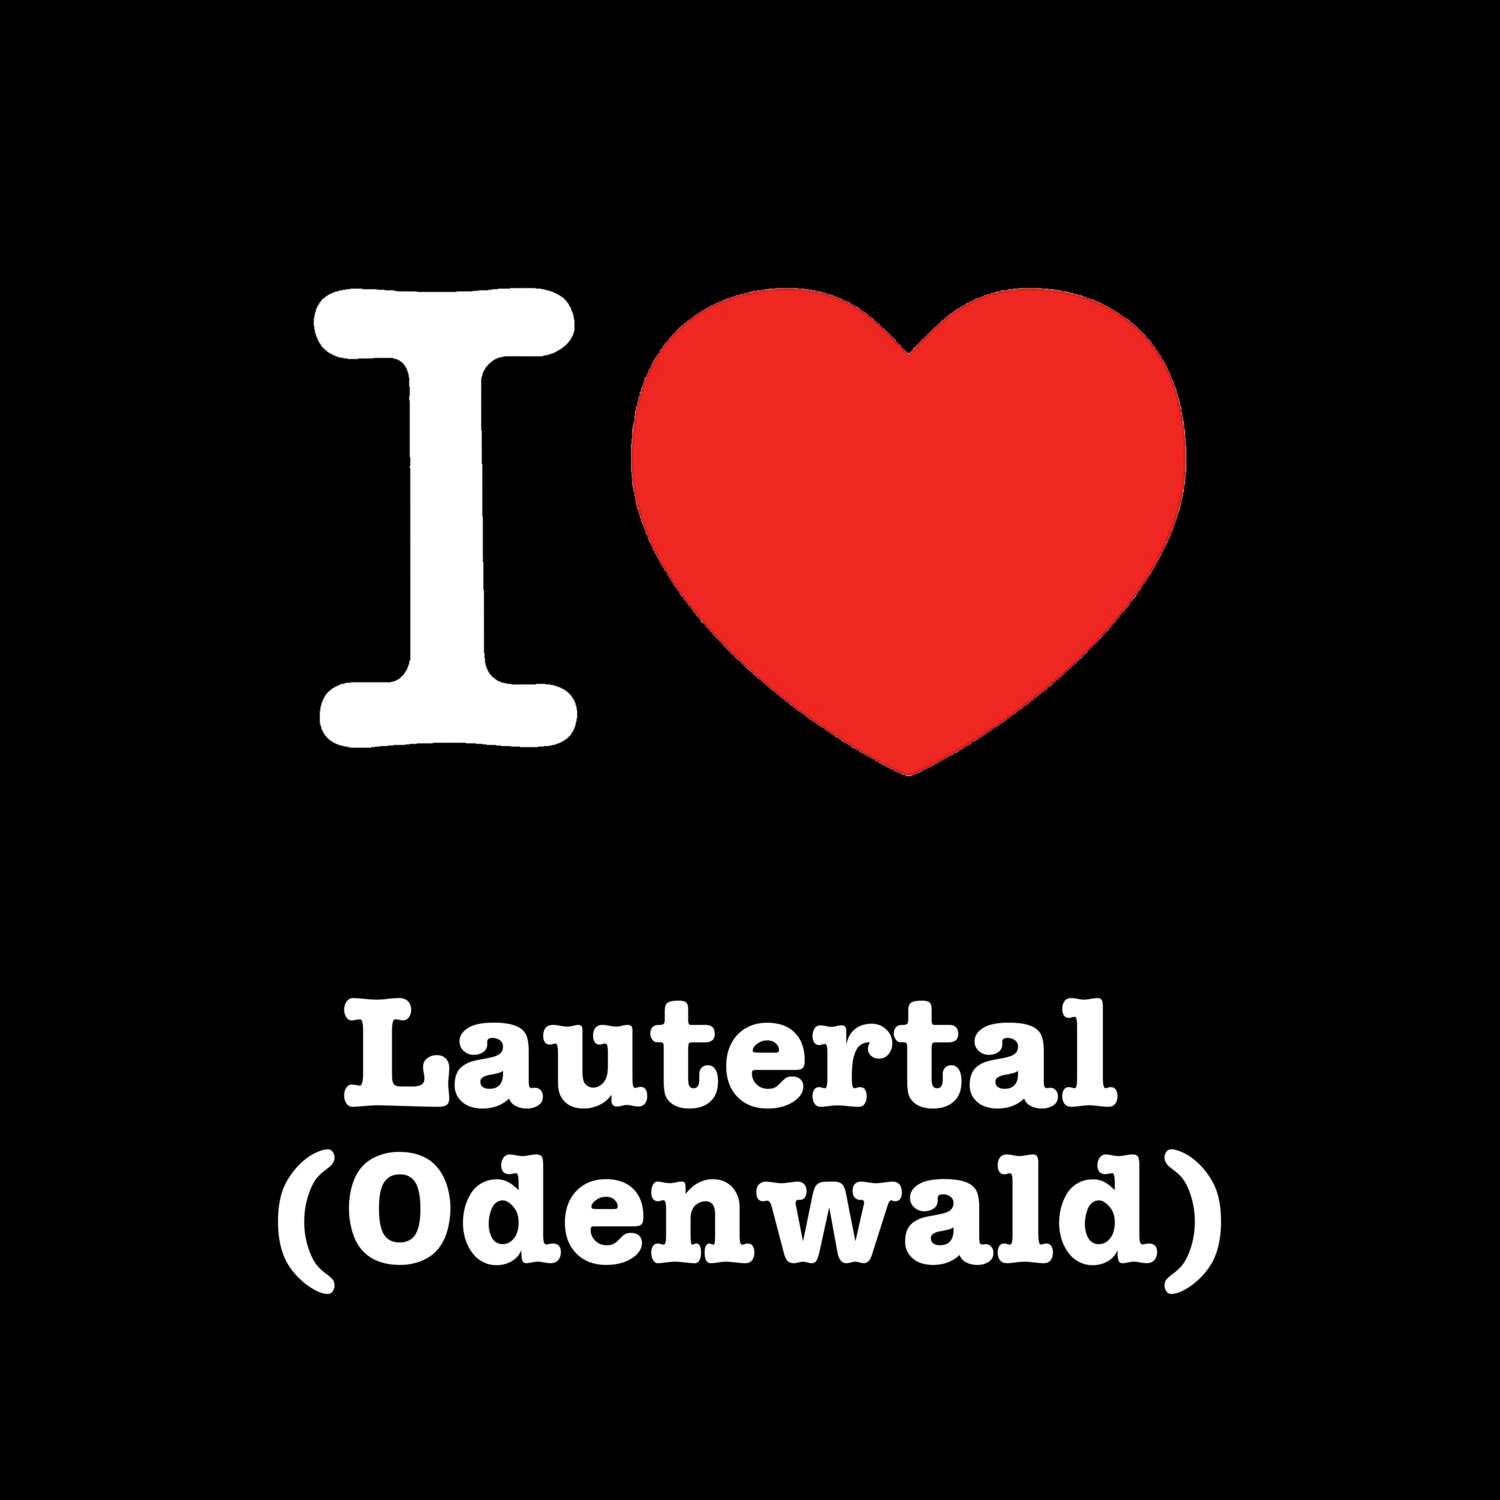 Lautertal (Odenwald) T-Shirt »I love«